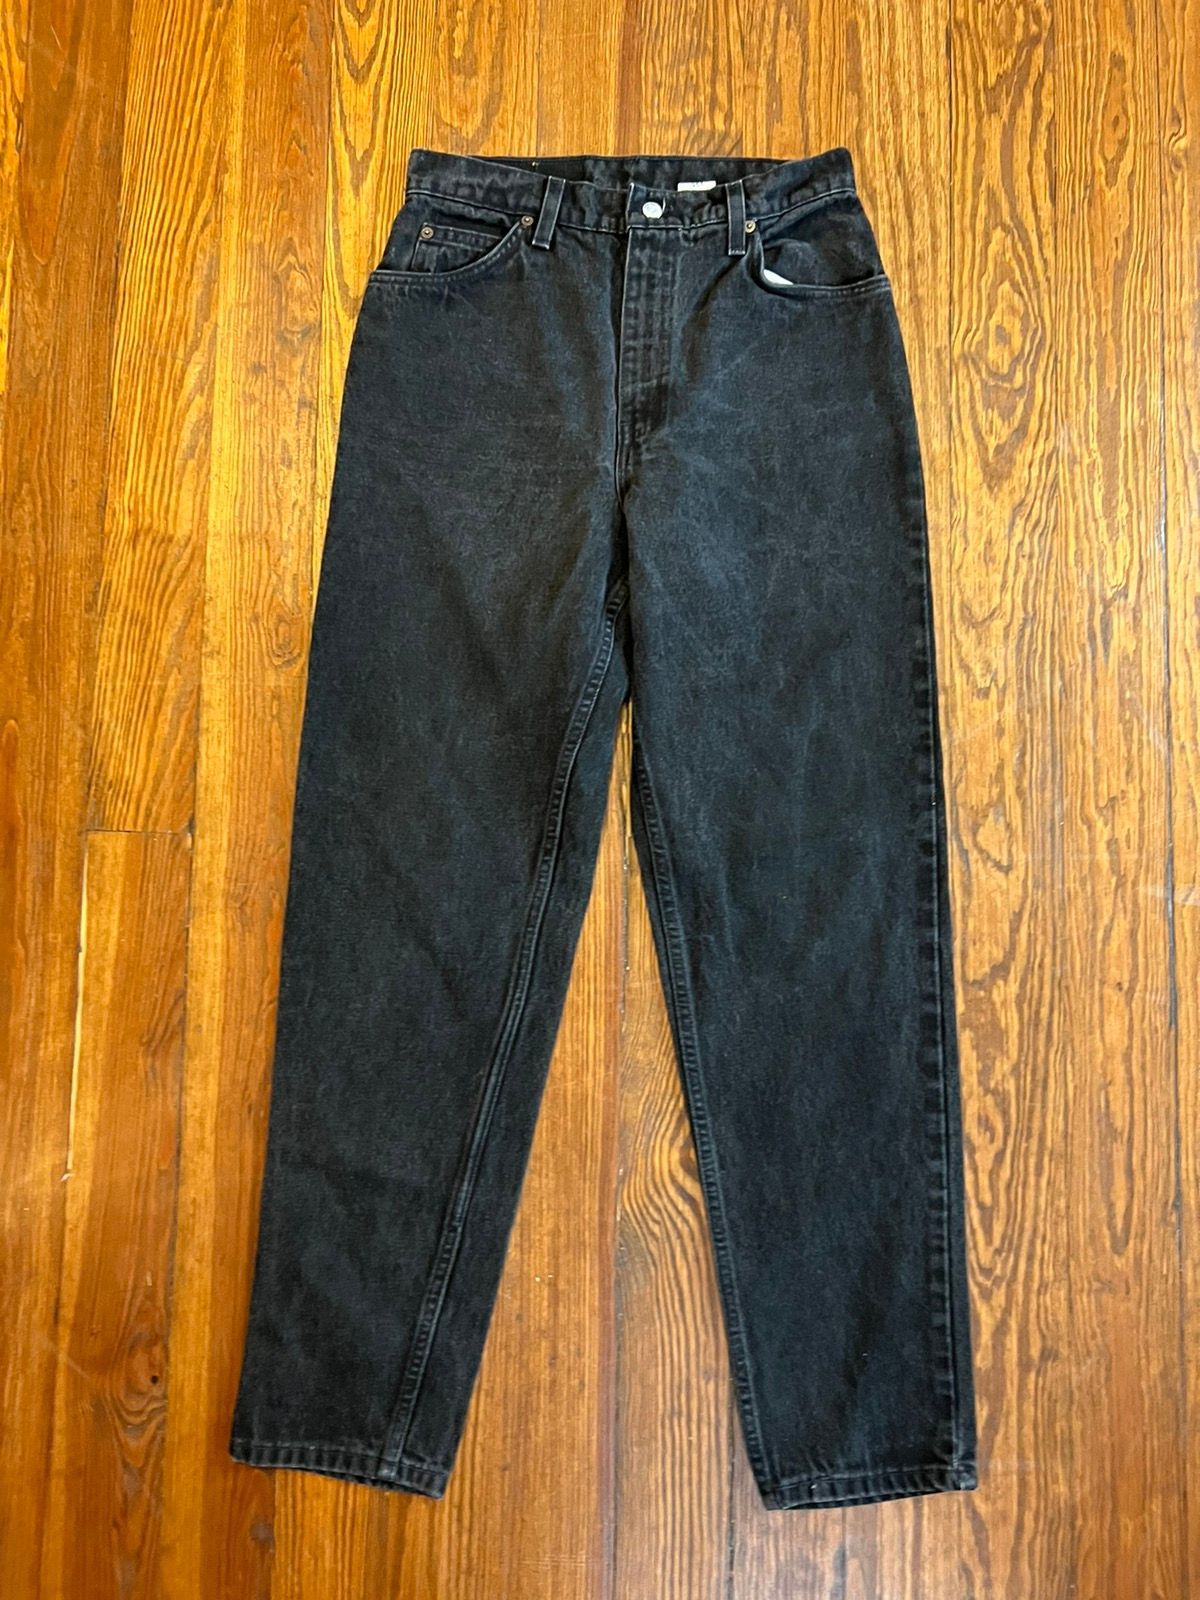 Vintage Vintage Levi’s 951 Black Denim Jeans Made in USA Size US 29 - 5 Thumbnail